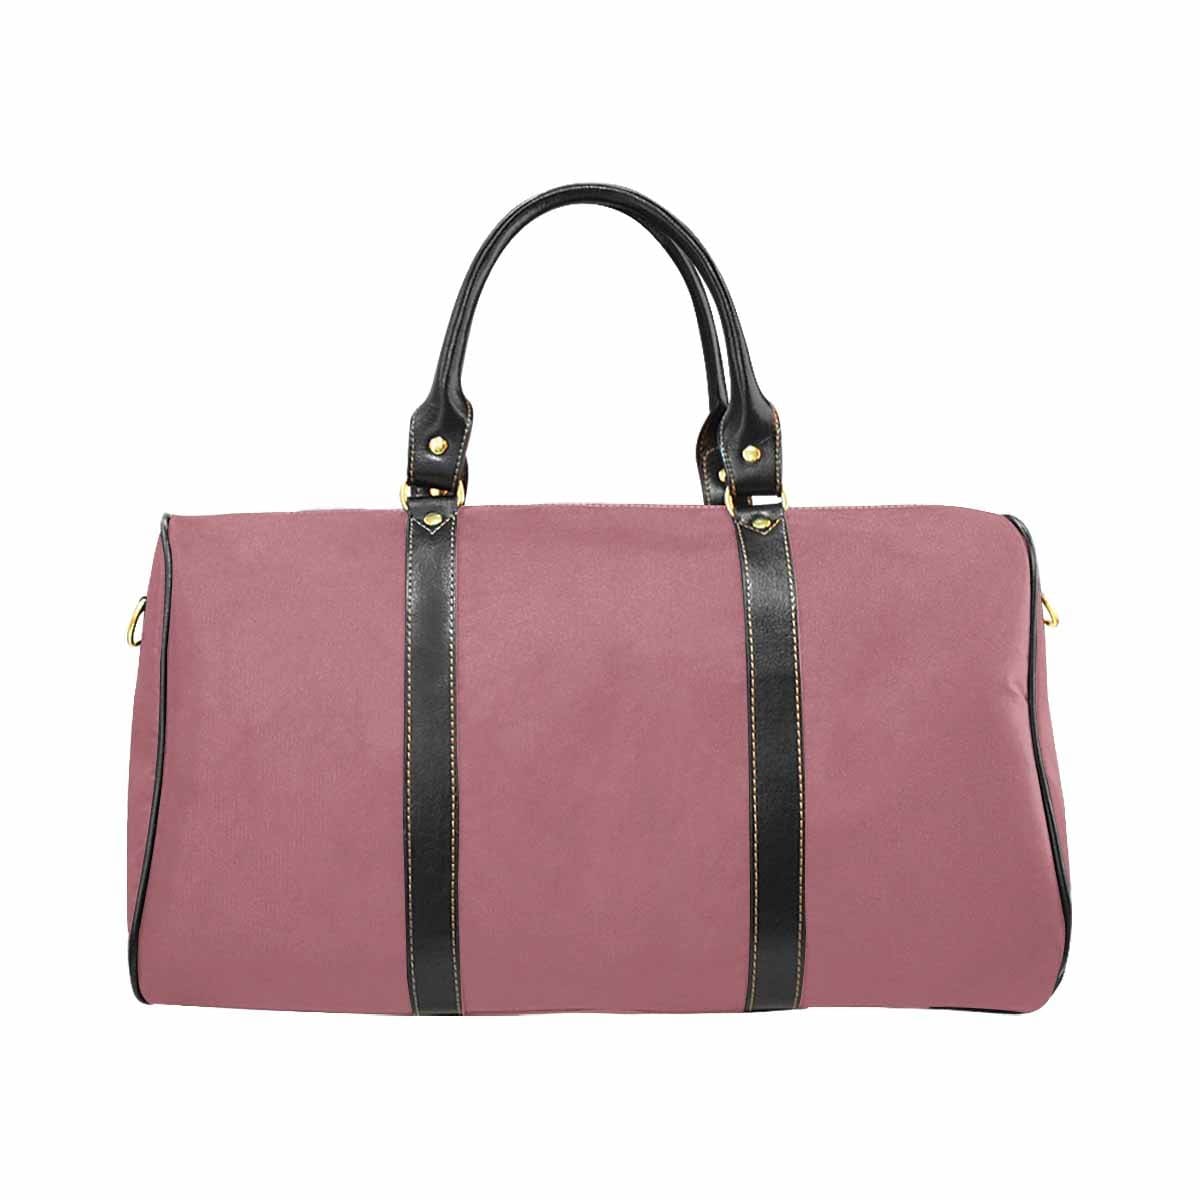 Rose Gold Red Travel Bag Carry On Luggage Adjustable Strap Black - Bags | Travel